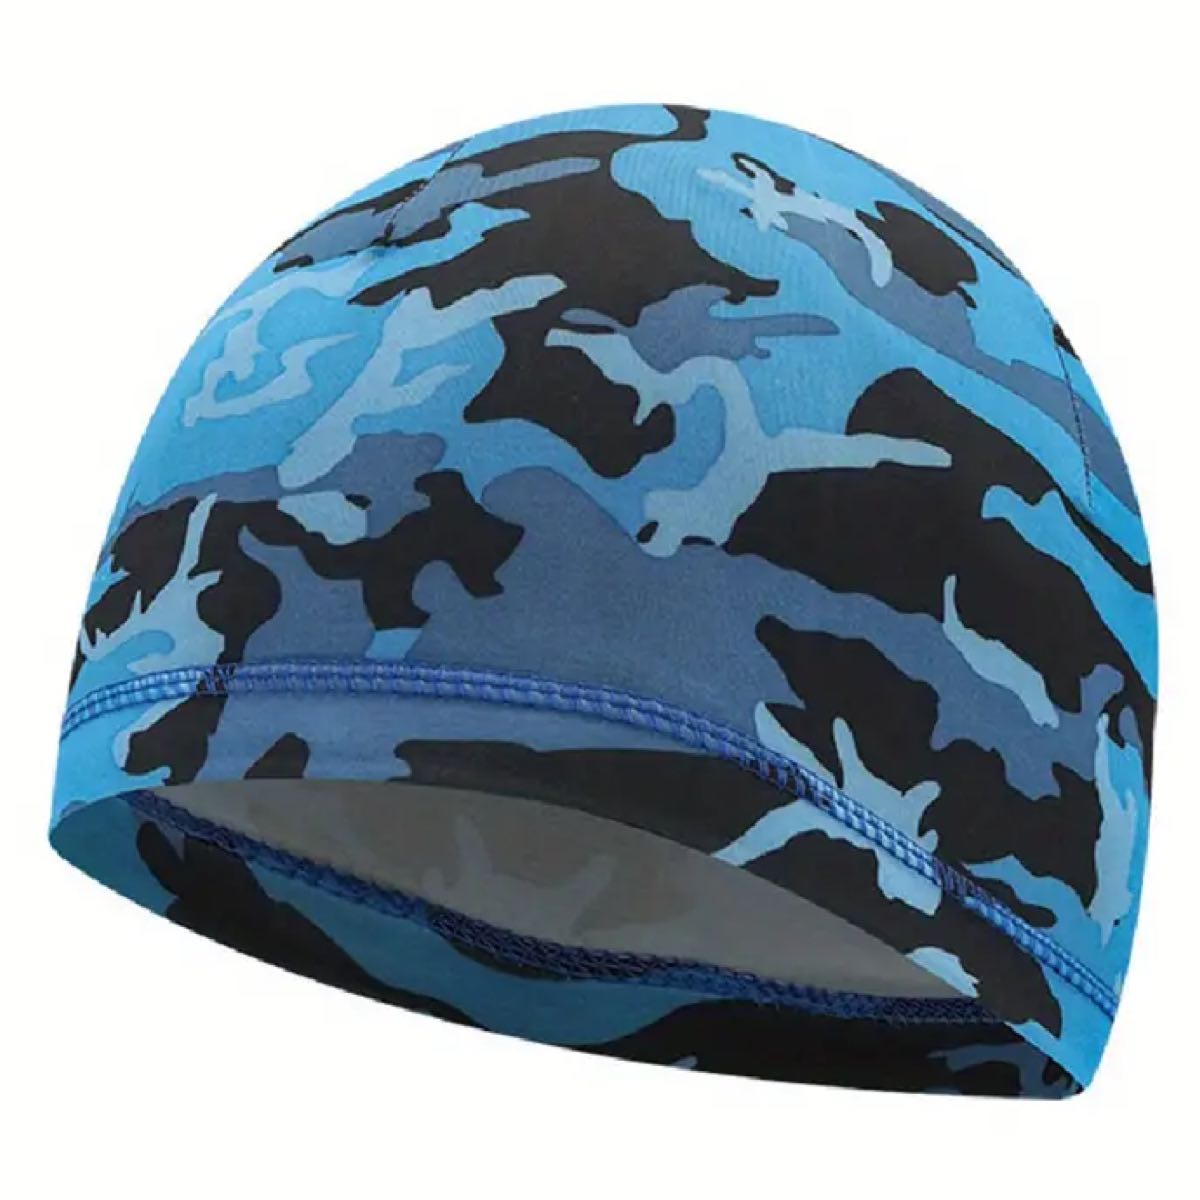 StealthRider: The Blue Camo Performance Riding Cap (#skullcap-H ...